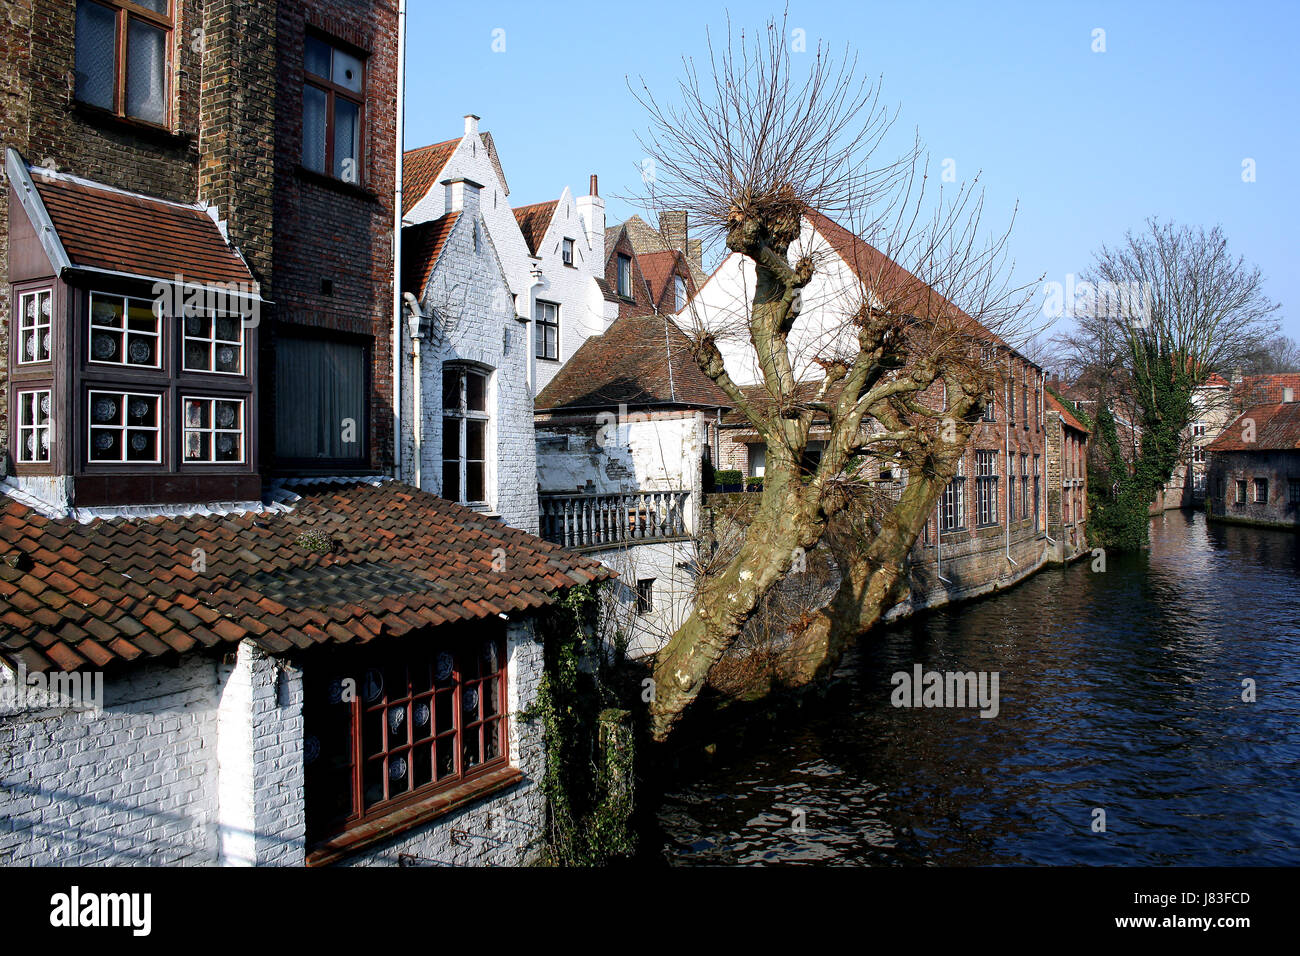 Turismo histórico casco antiguo canal histórico edificio Bélgica brujas Foto de stock